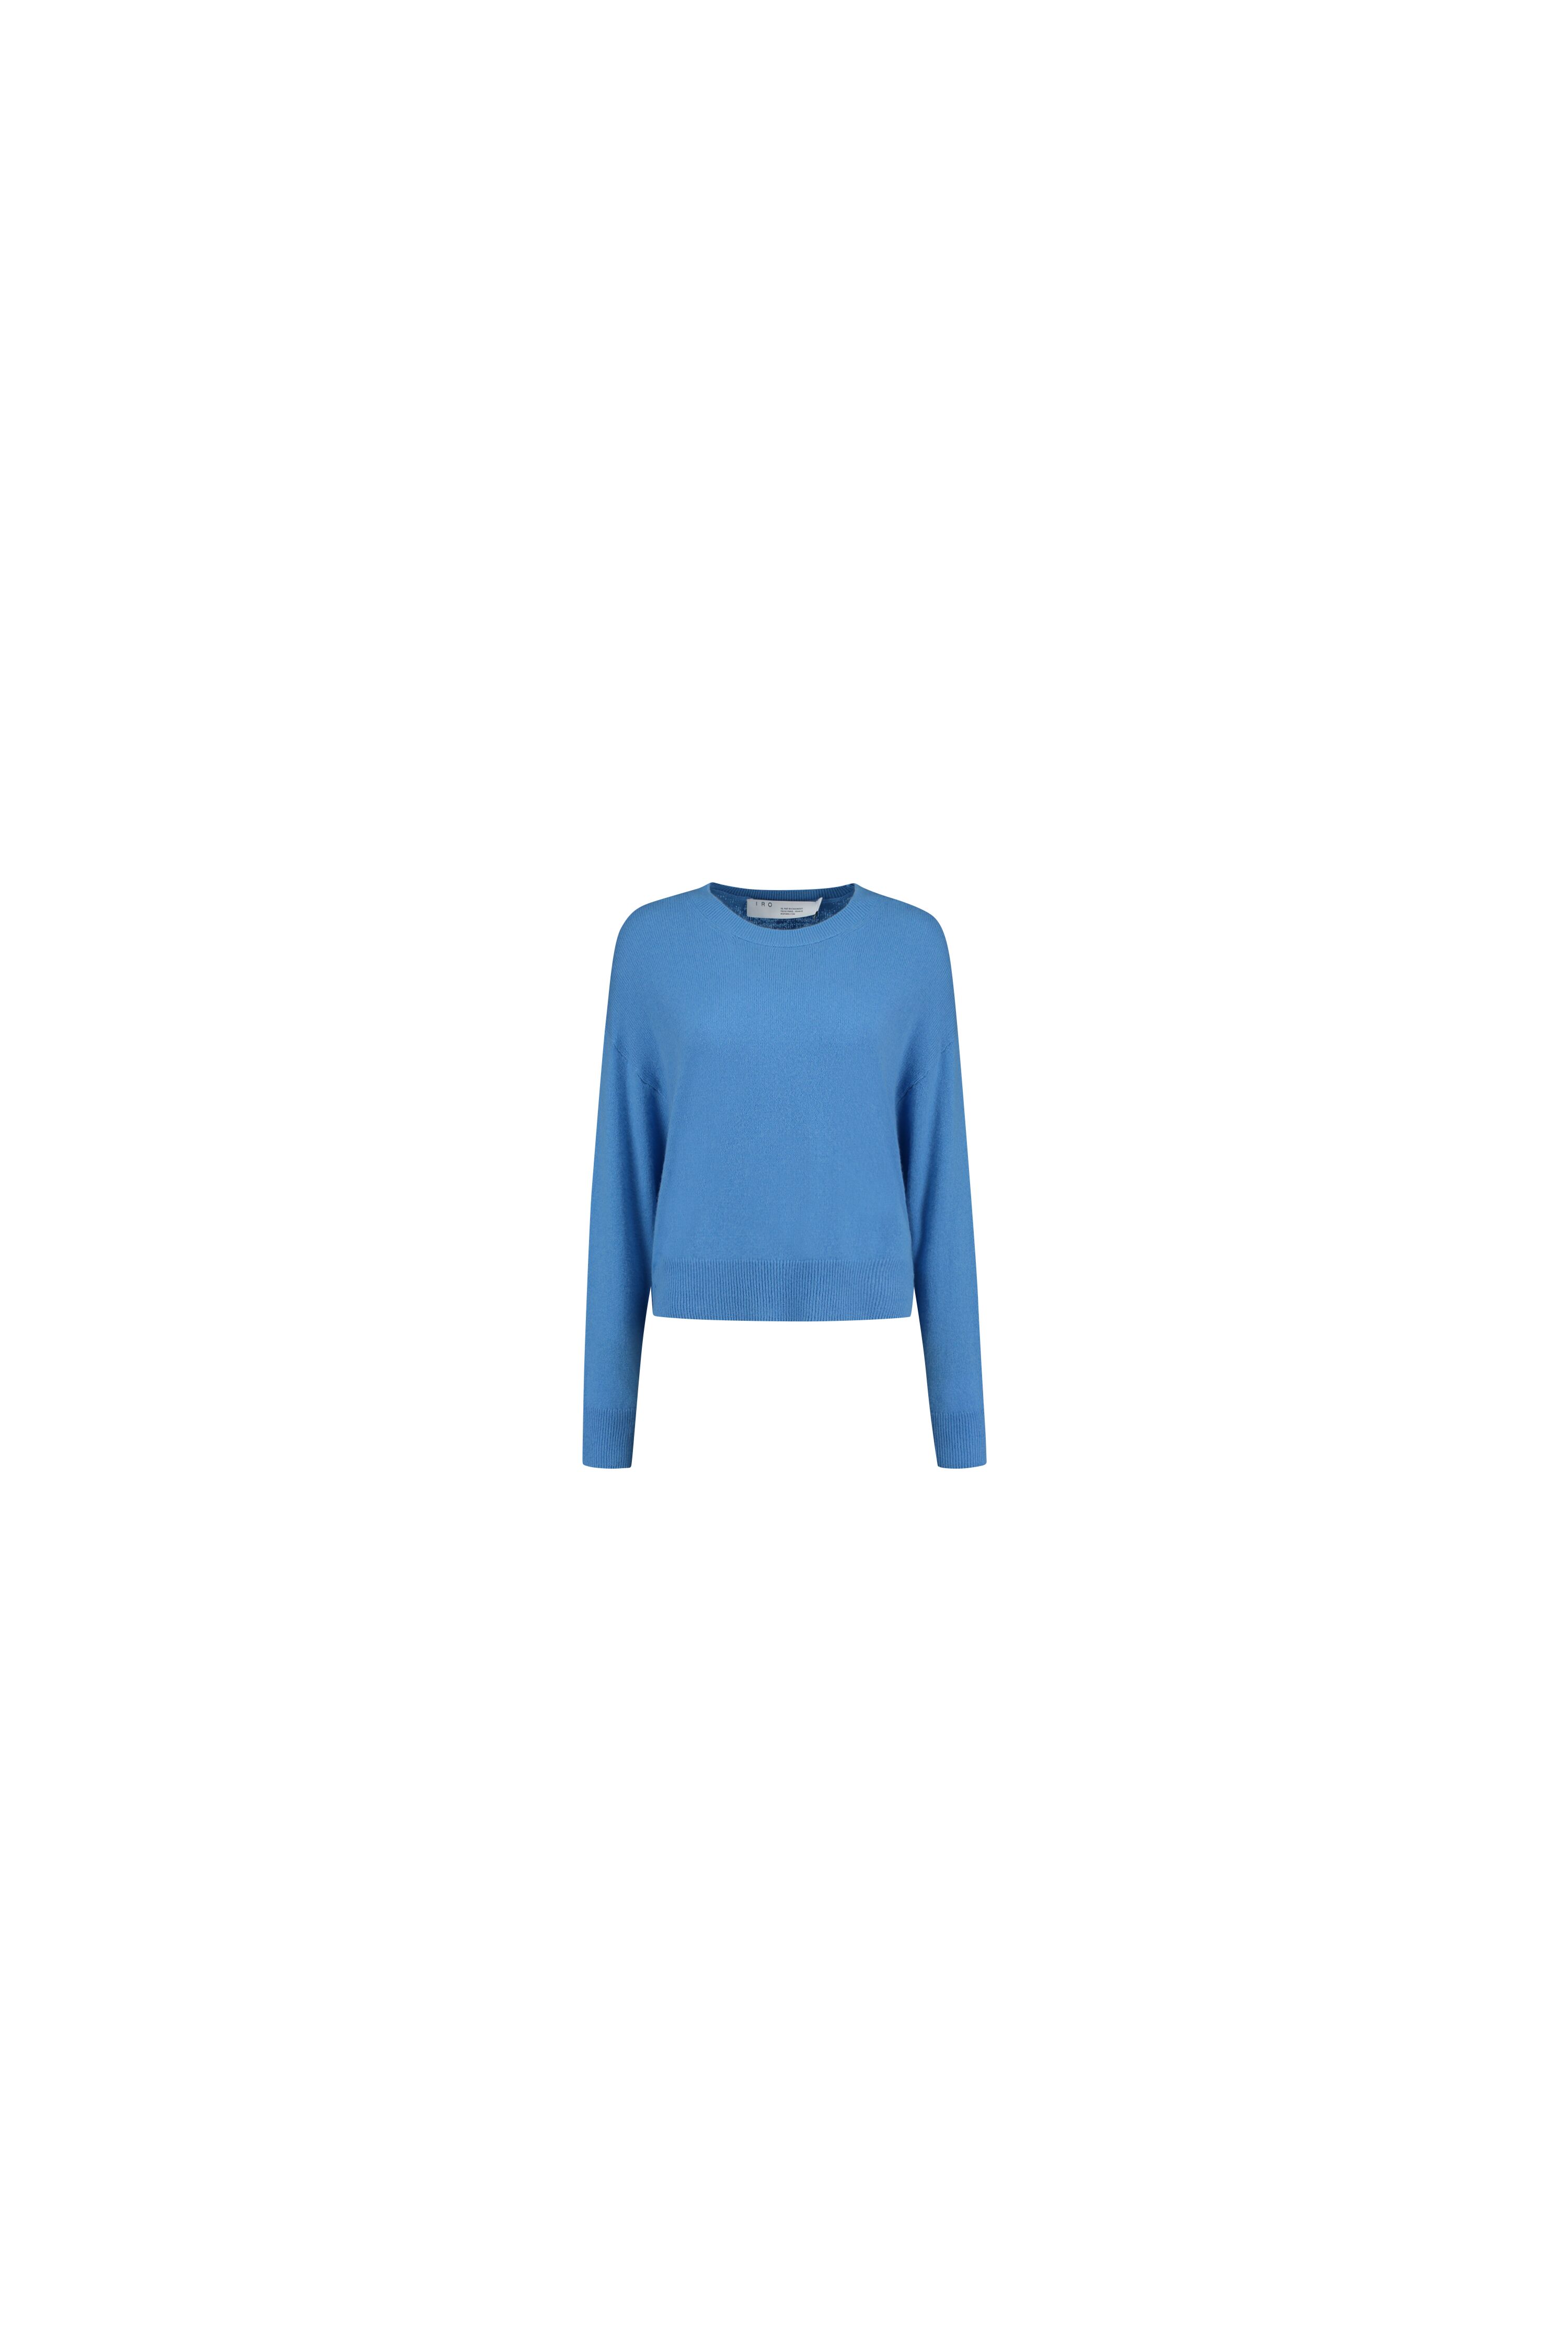 Iro Paris Tolbo Pullover Azur Blue - WP12TOLBO | Bloom Fashion